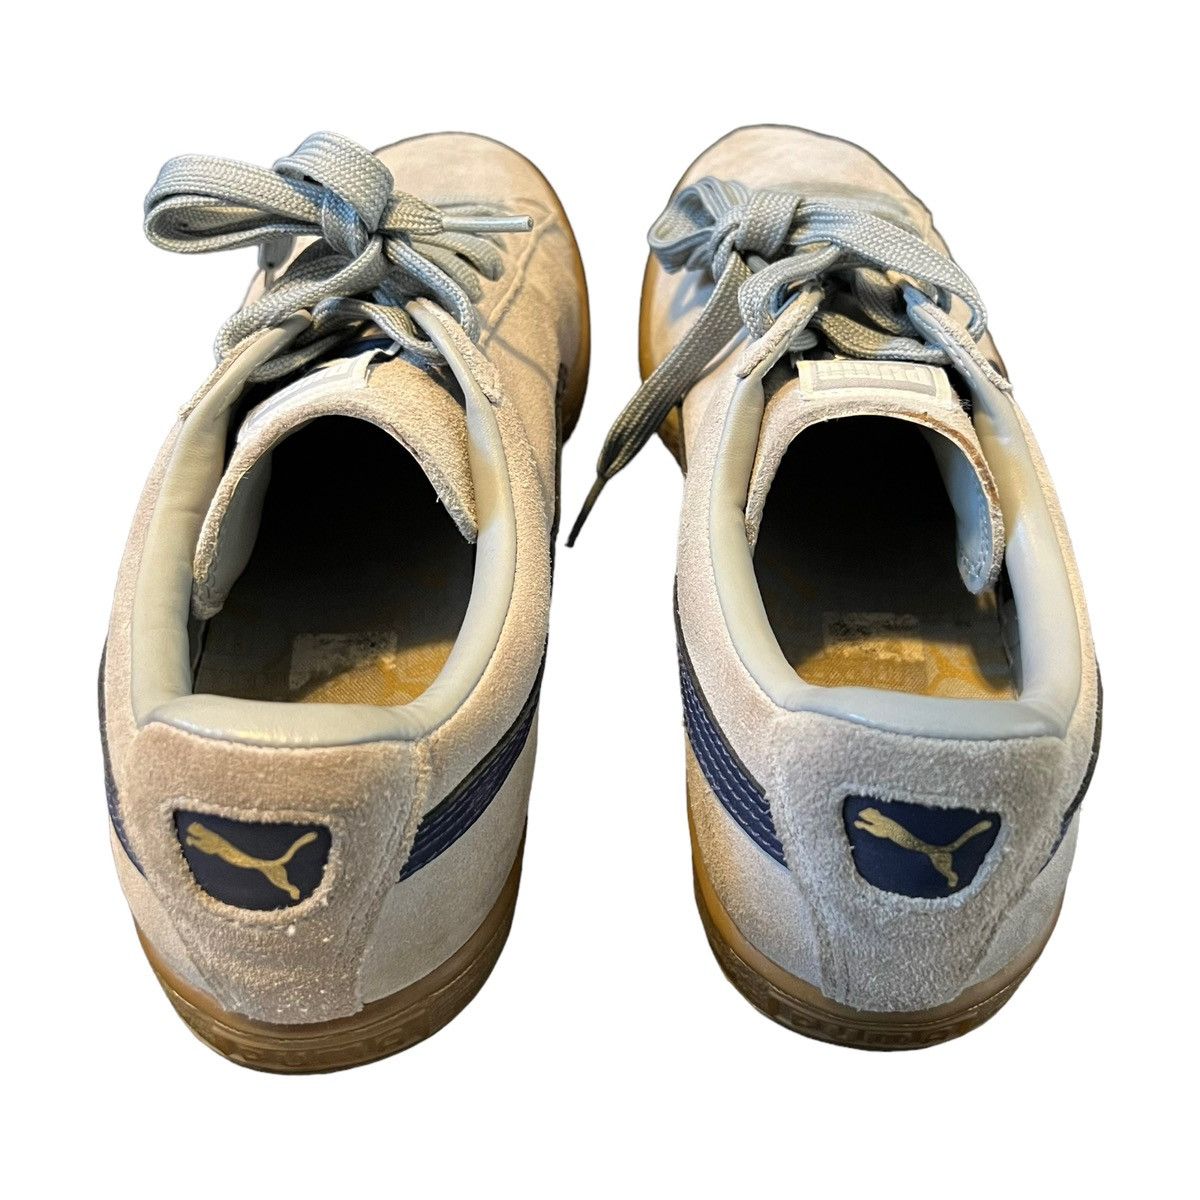 Vintage Puma Suede Classic XXI Sneakers Size US 8.5 / EU 41-42 - 6 Thumbnail